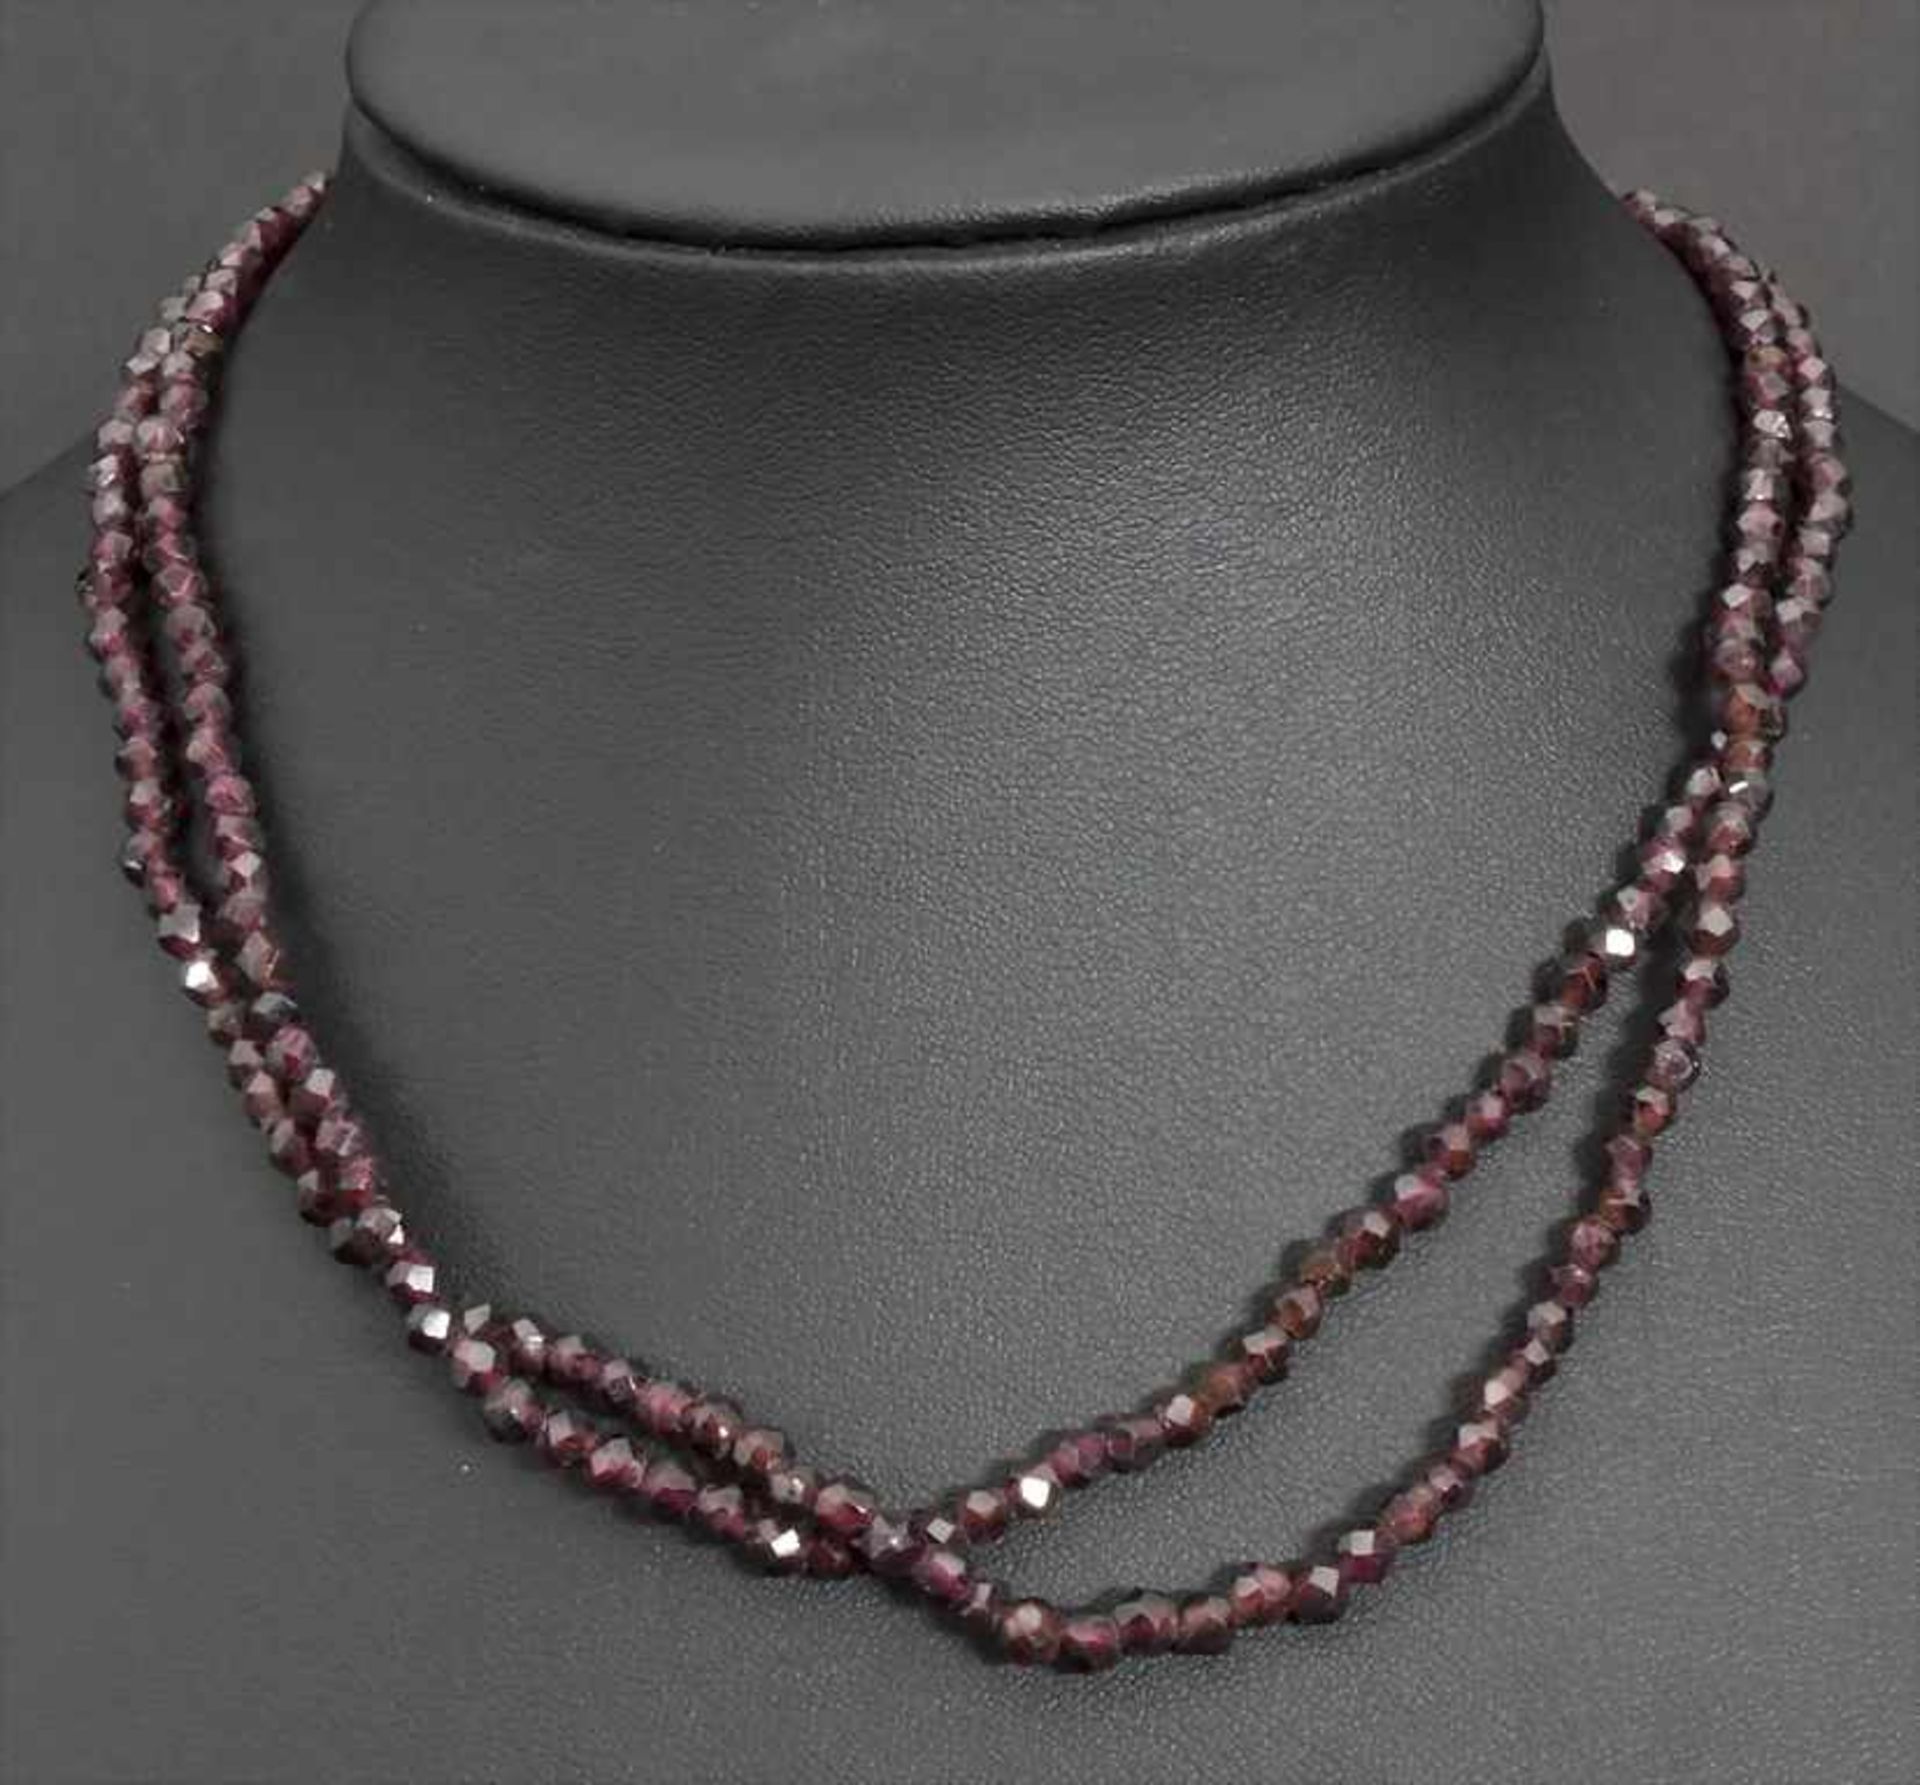 Granat-Collier / A garnet necklace - Image 6 of 6